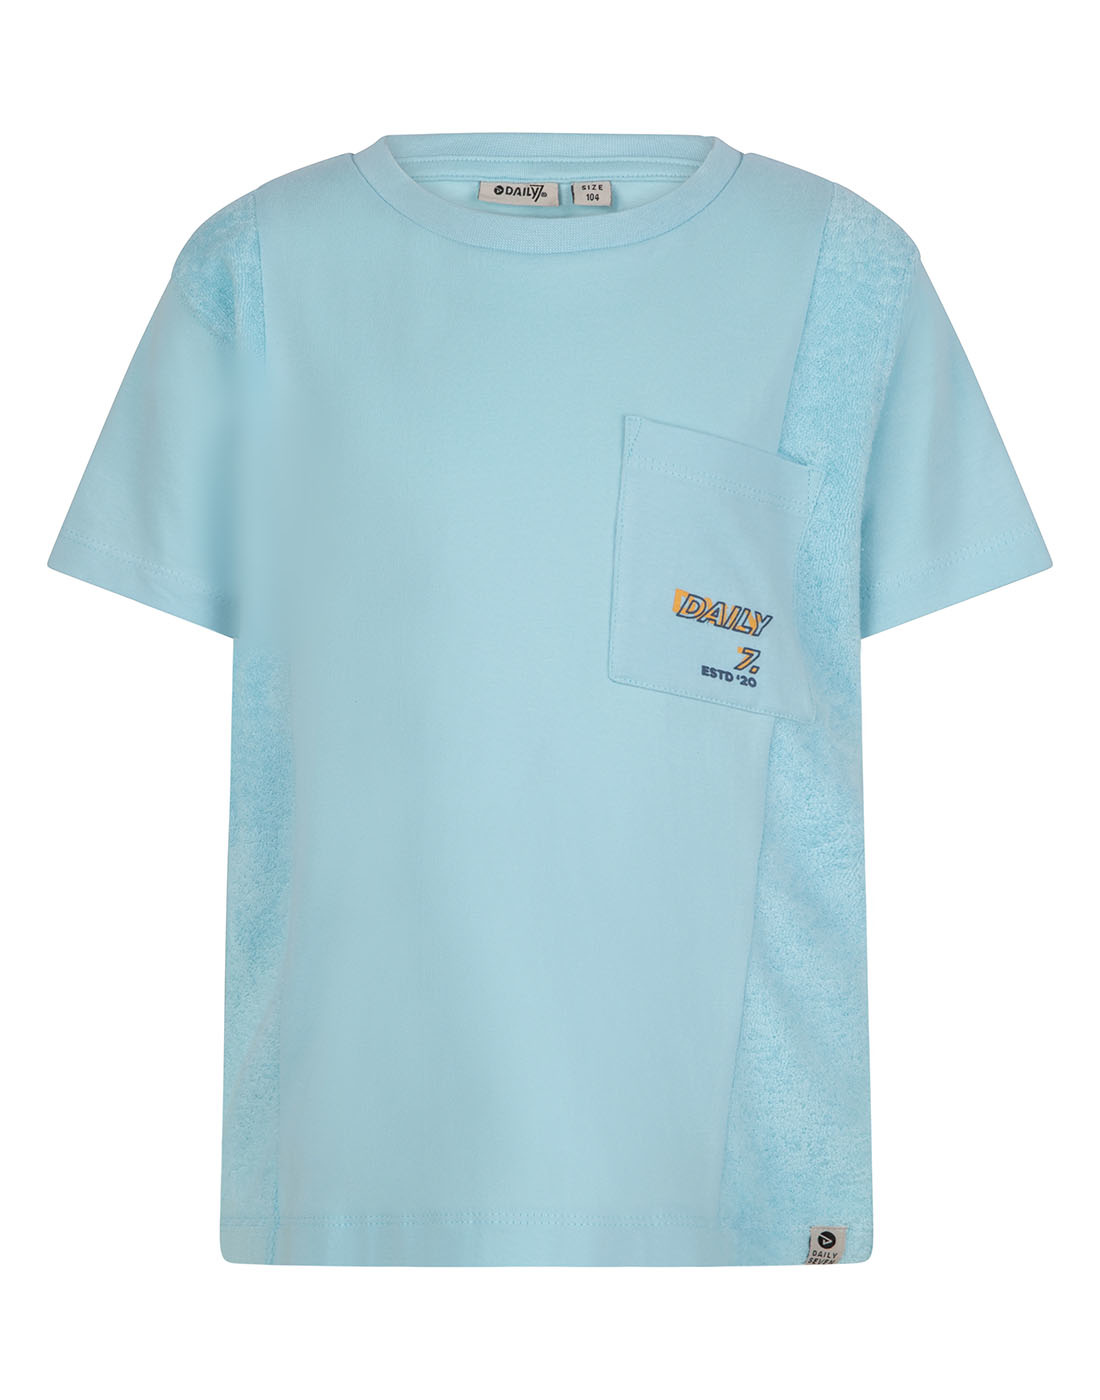 Daily7 Jongens t-shirt badstof - Cool blauw